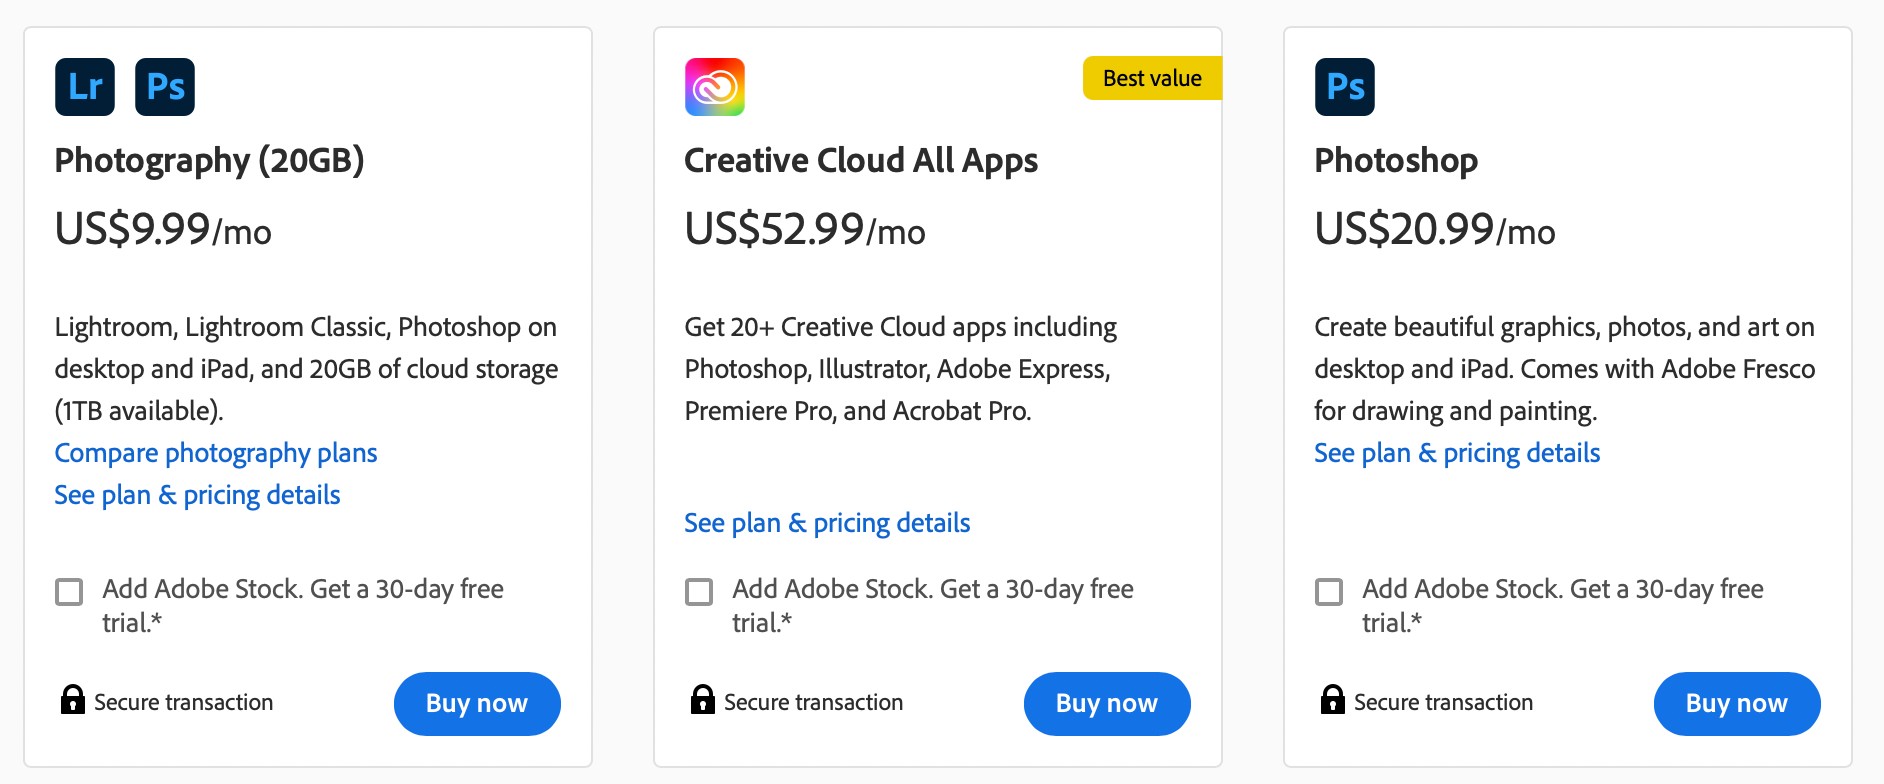 Photoshop photo editing prices 